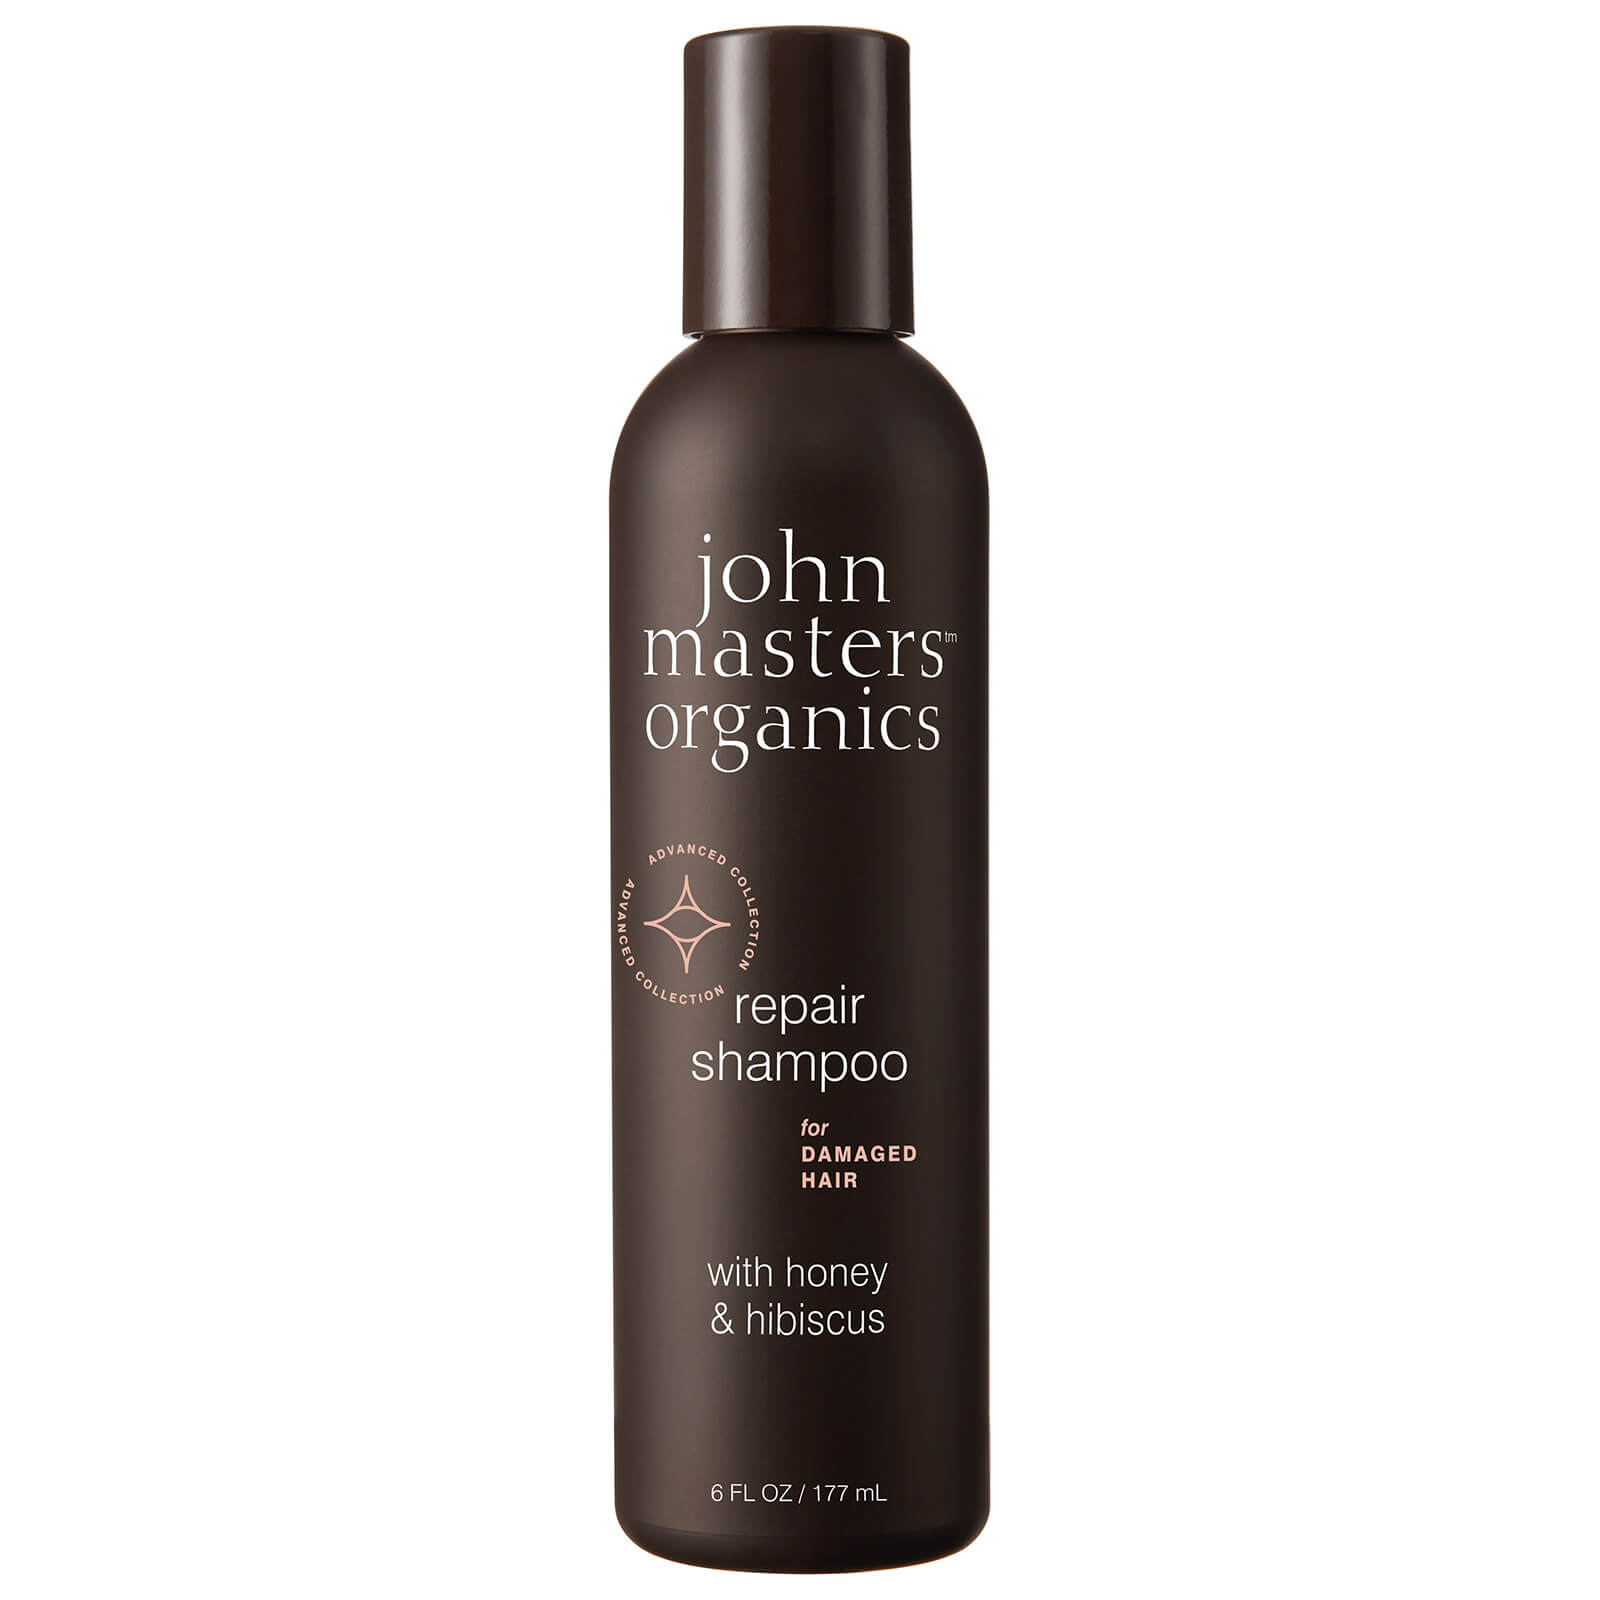 John Masters Organics Shampoo for Damaged Hair with Honey & Hibiscus 177ml